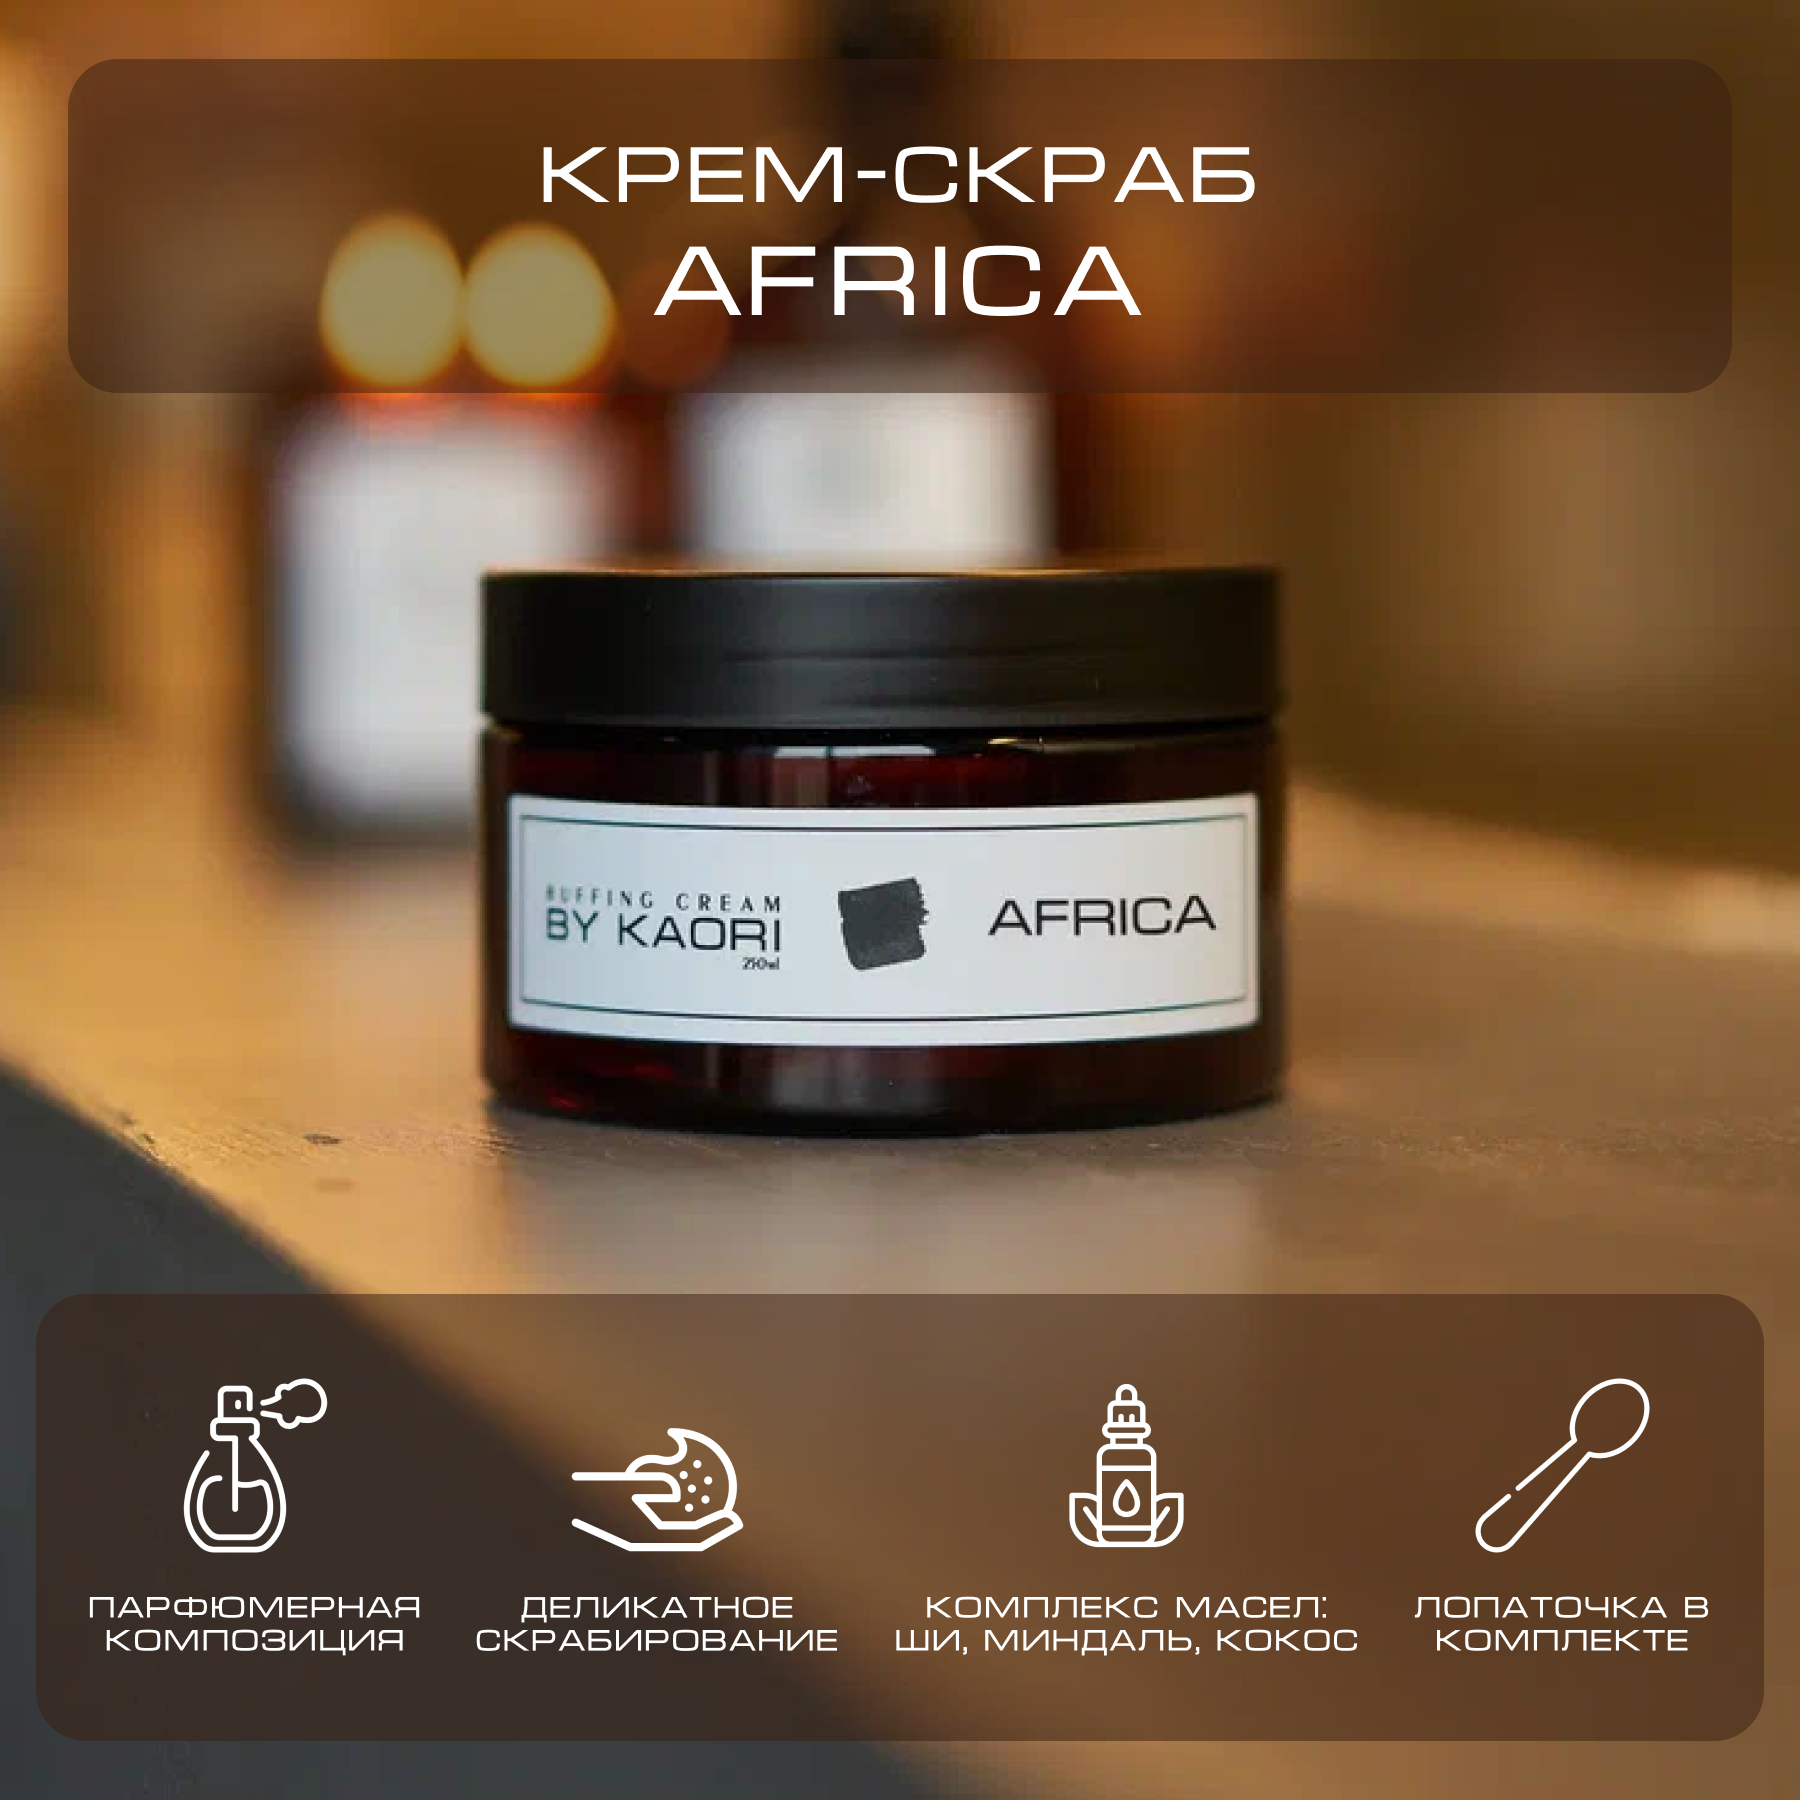 Крем скраб для тела By Kaori отшелушивающий парфюмированный Africa 250 г how europe underdeveloped africa